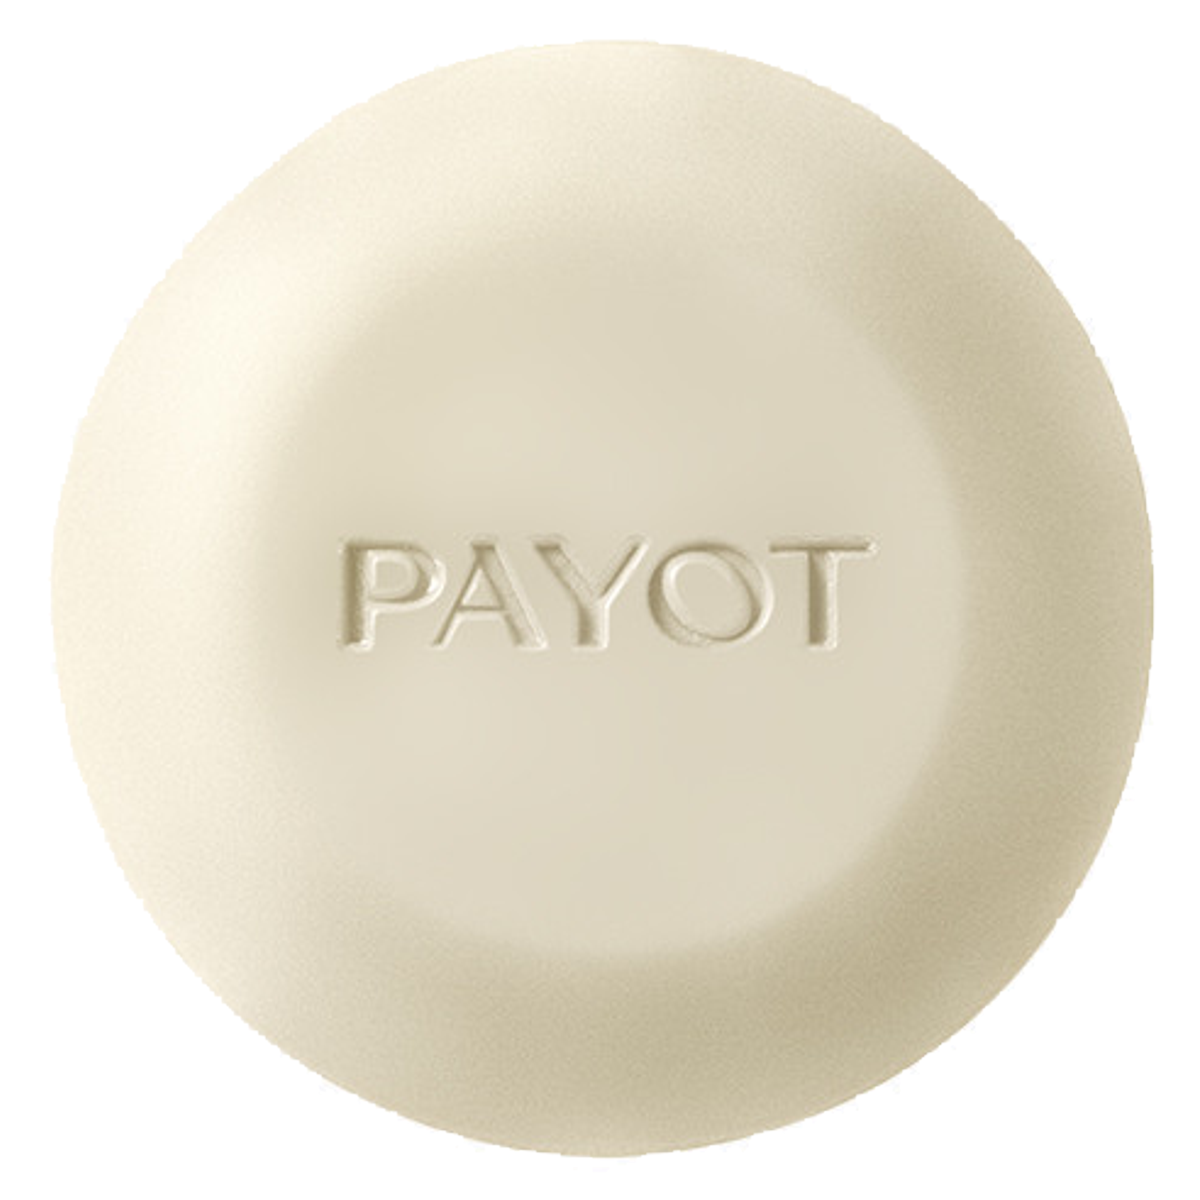 Payot Essentiel Shampoing Solide 80 g